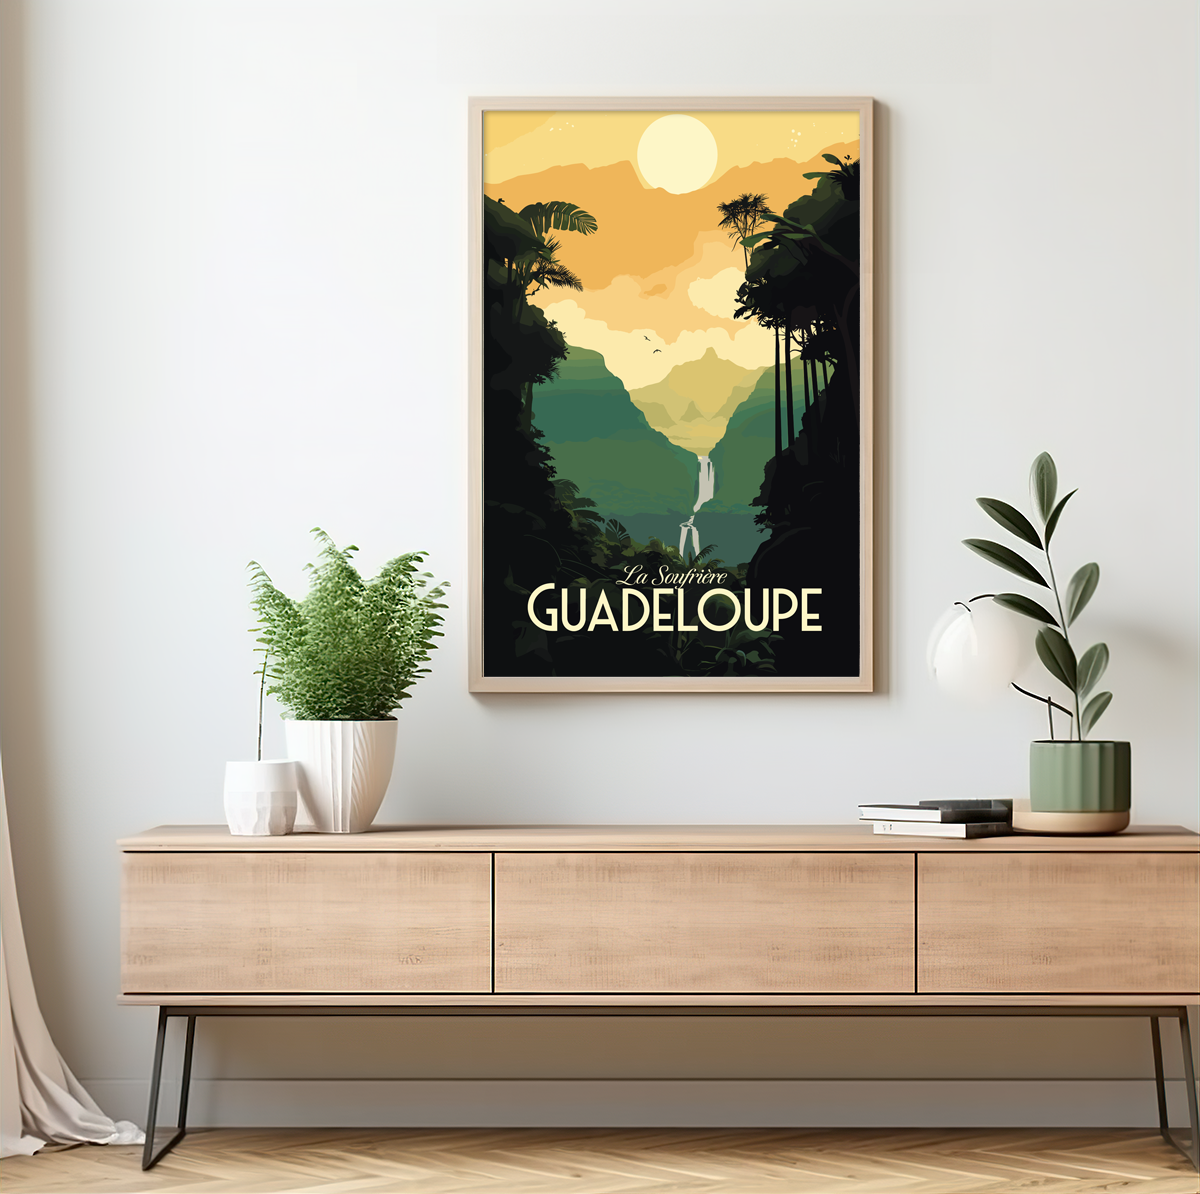 Guadeloupe - La Soufriere poster by bon voyage design